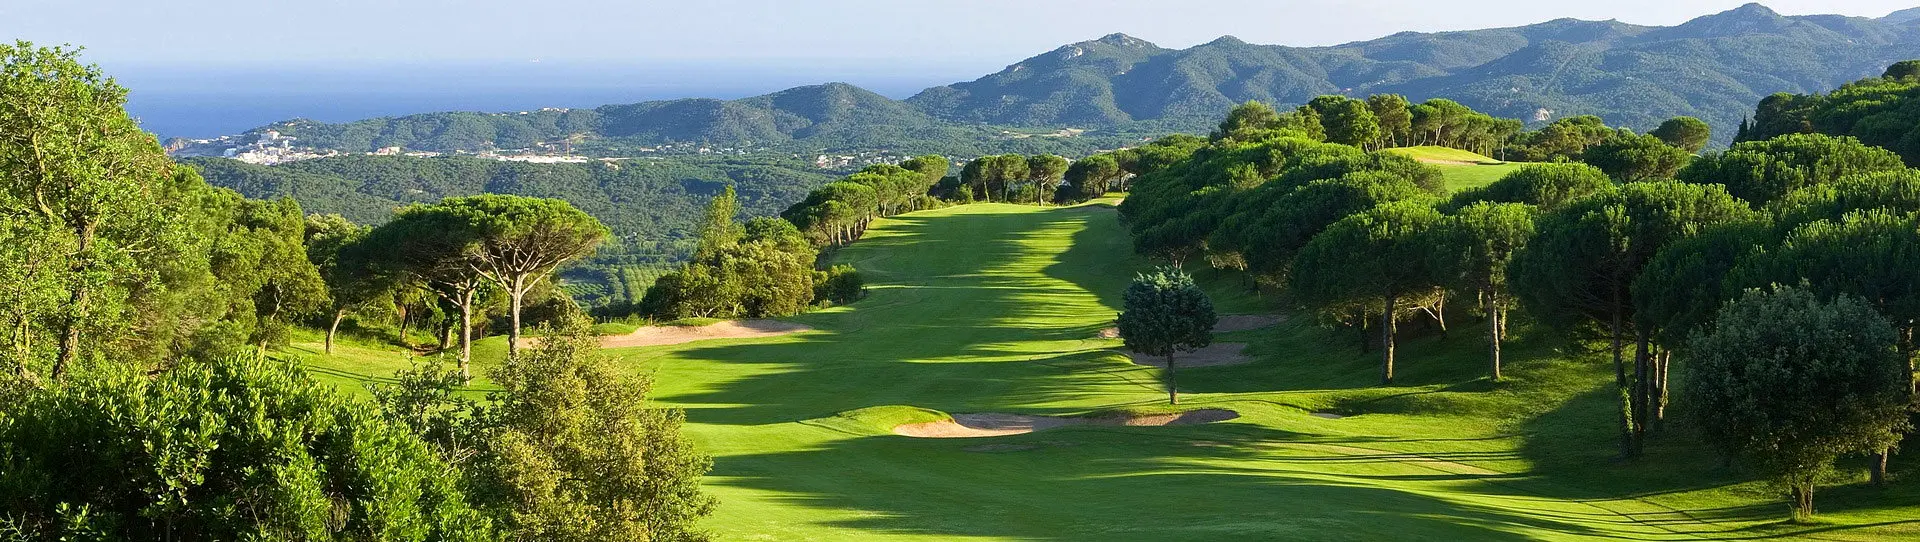 Spain Golf Driving Range - Golf d'Aro - Mas Nou Academy - Photo 1